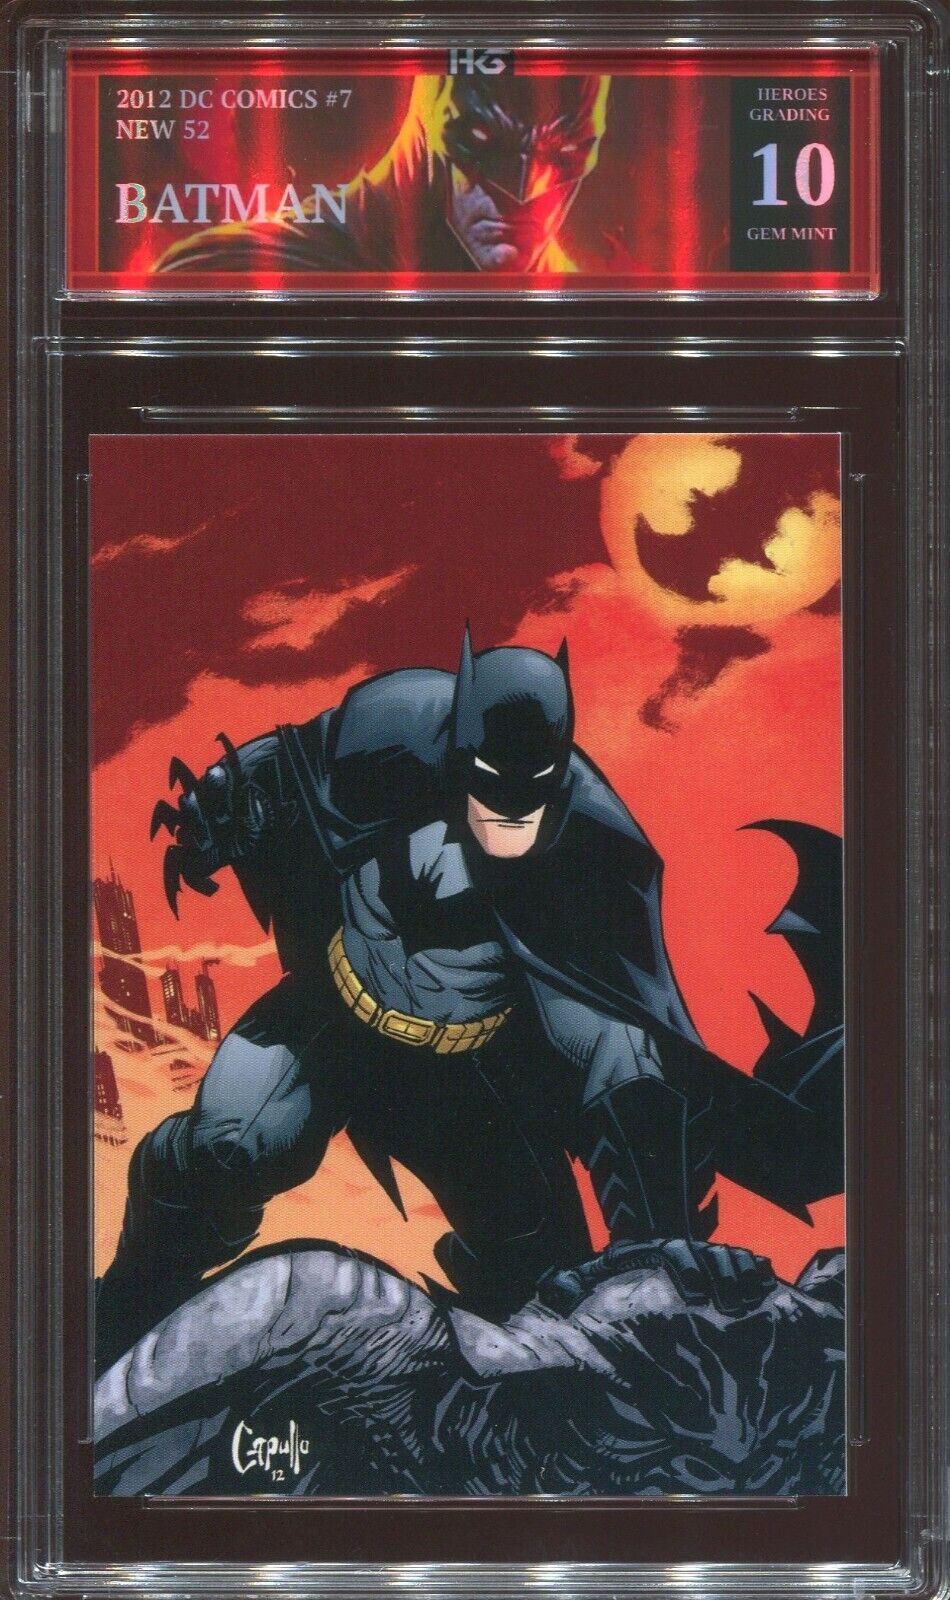 2012 CRYPTOZOIC DC COMICS THE NEW 52 BATMAN #7 HEROES GRADING GEM MINT 10